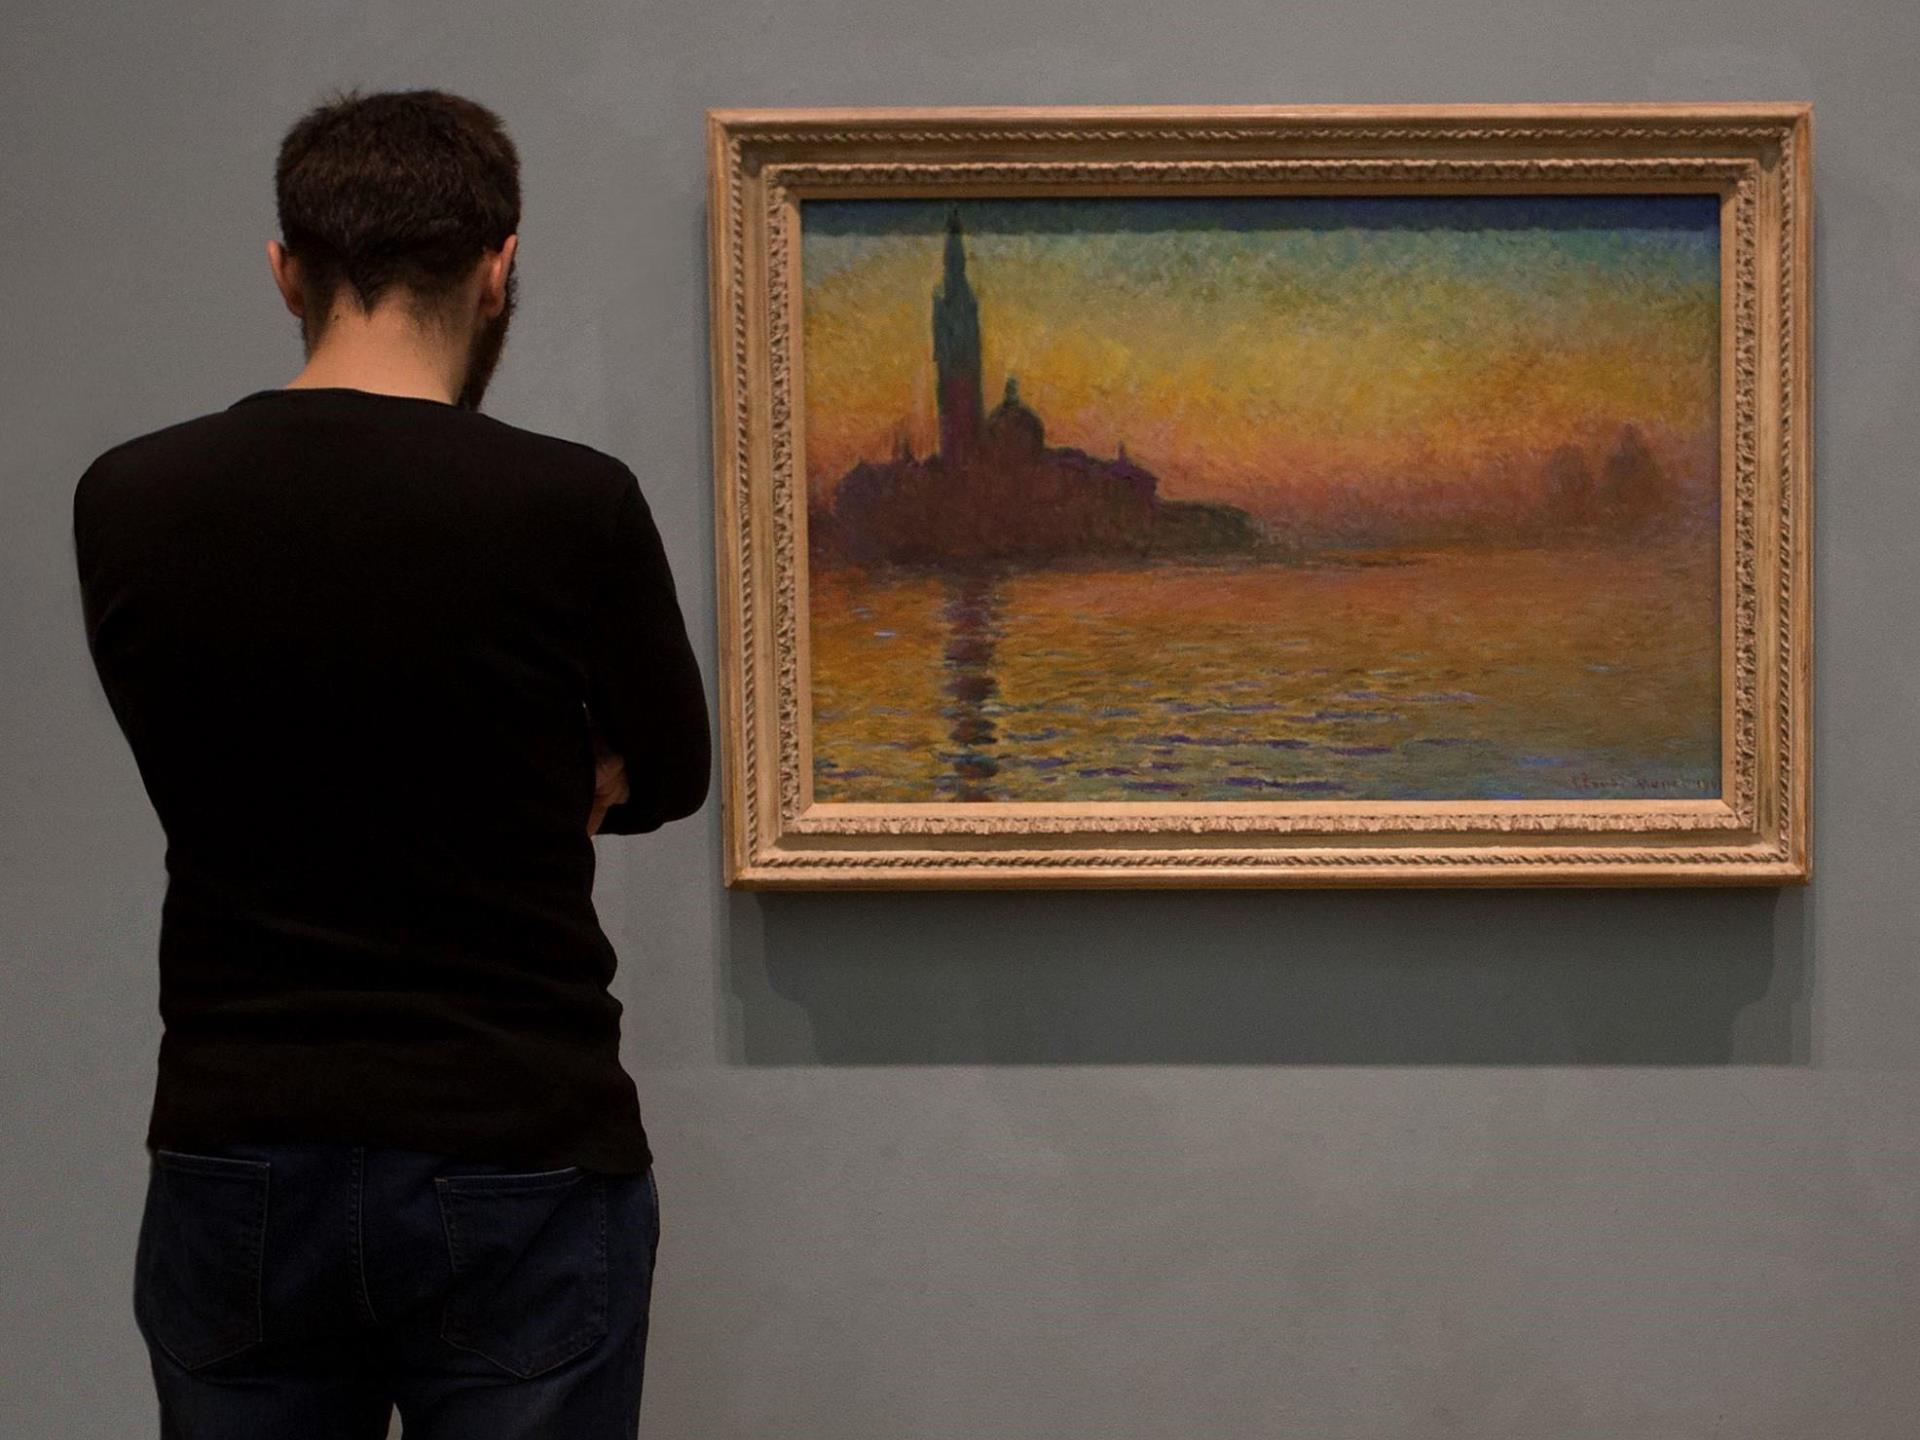 Viewing Monet